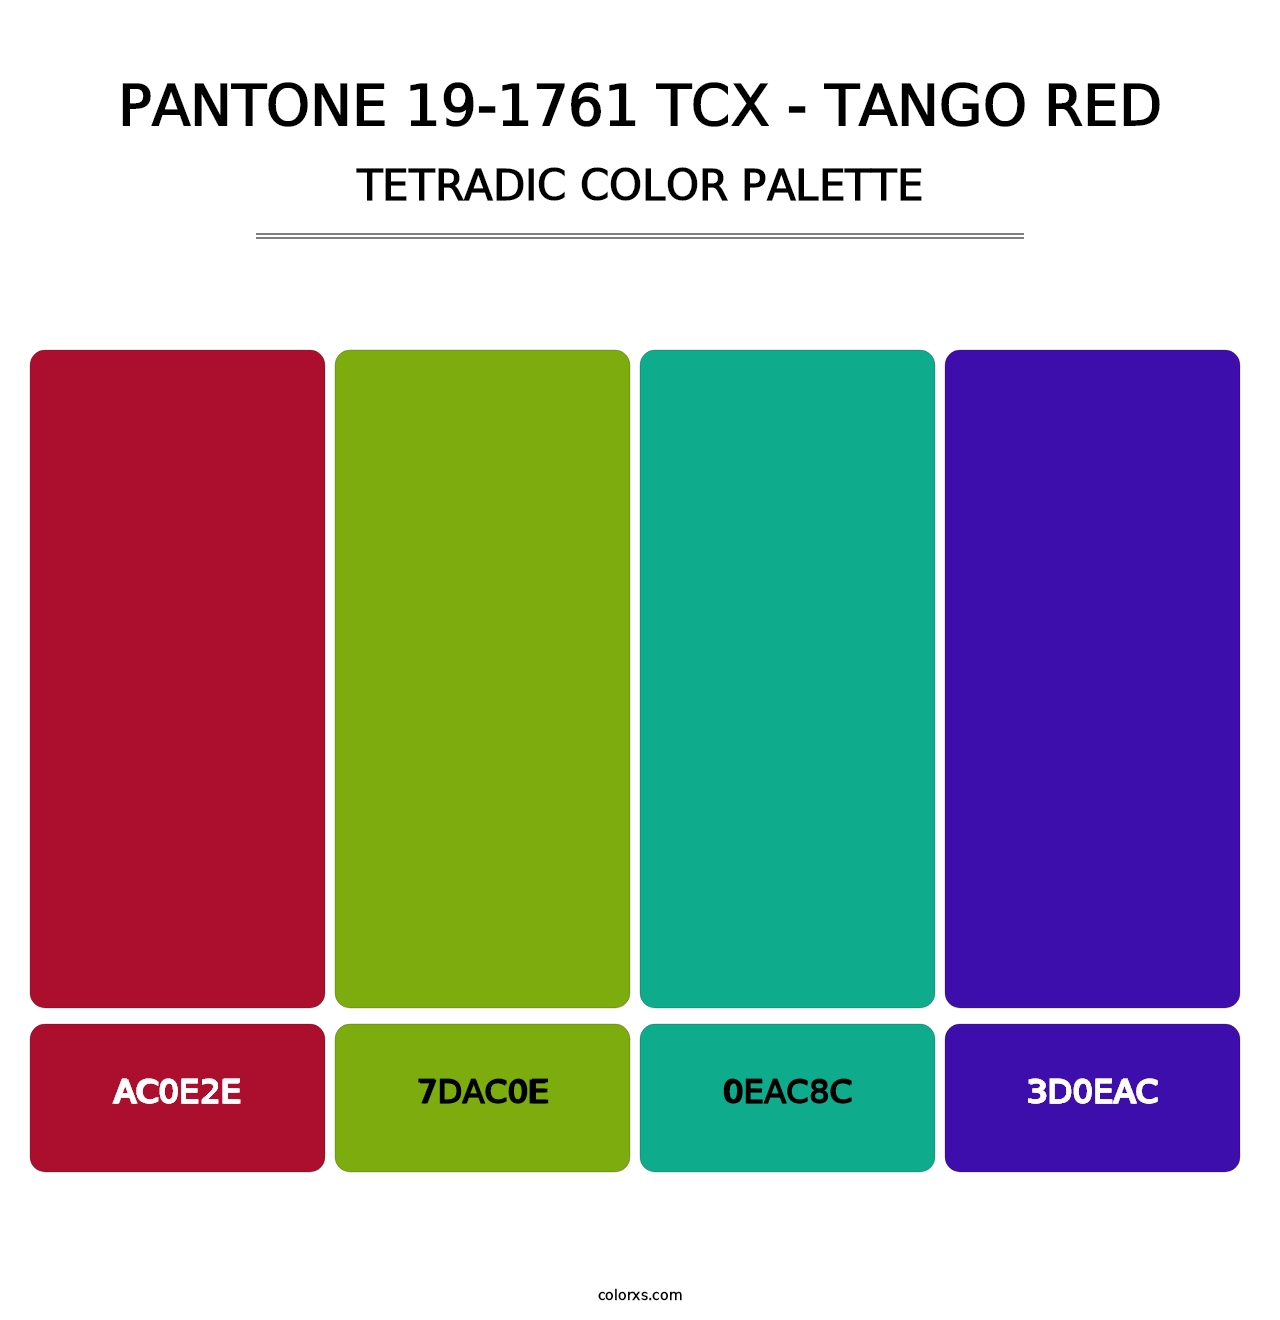 PANTONE 19-1761 TCX - Tango Red - Tetradic Color Palette